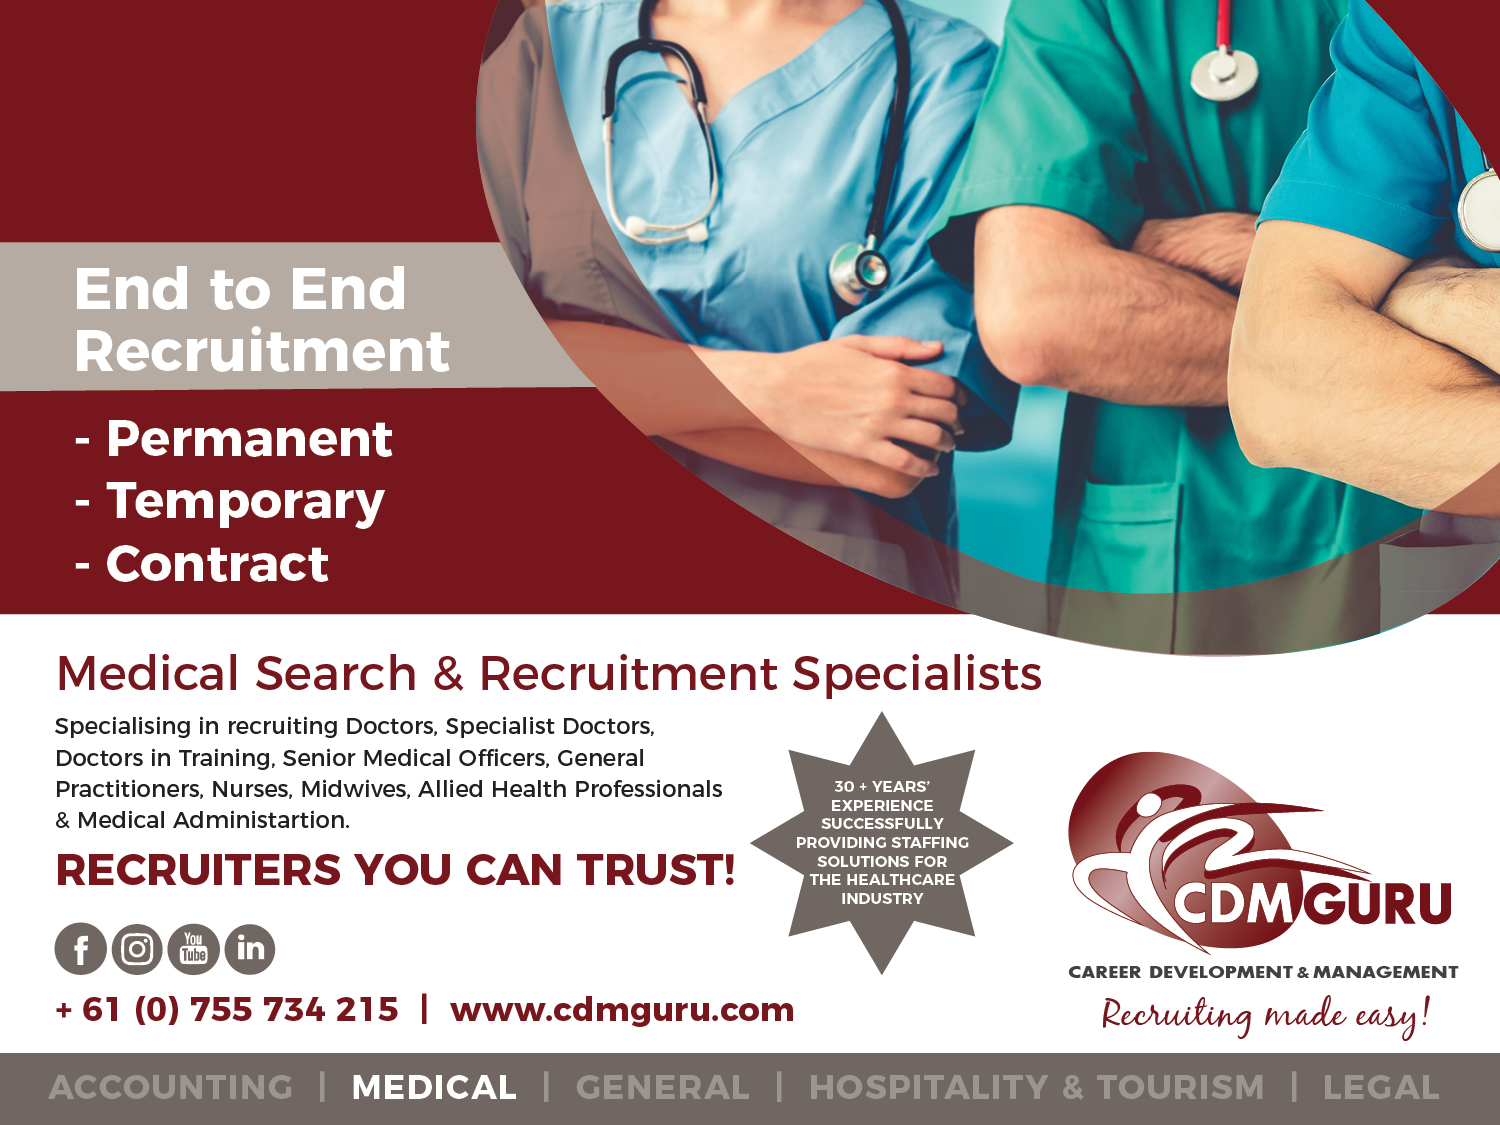 Medical Recruitment